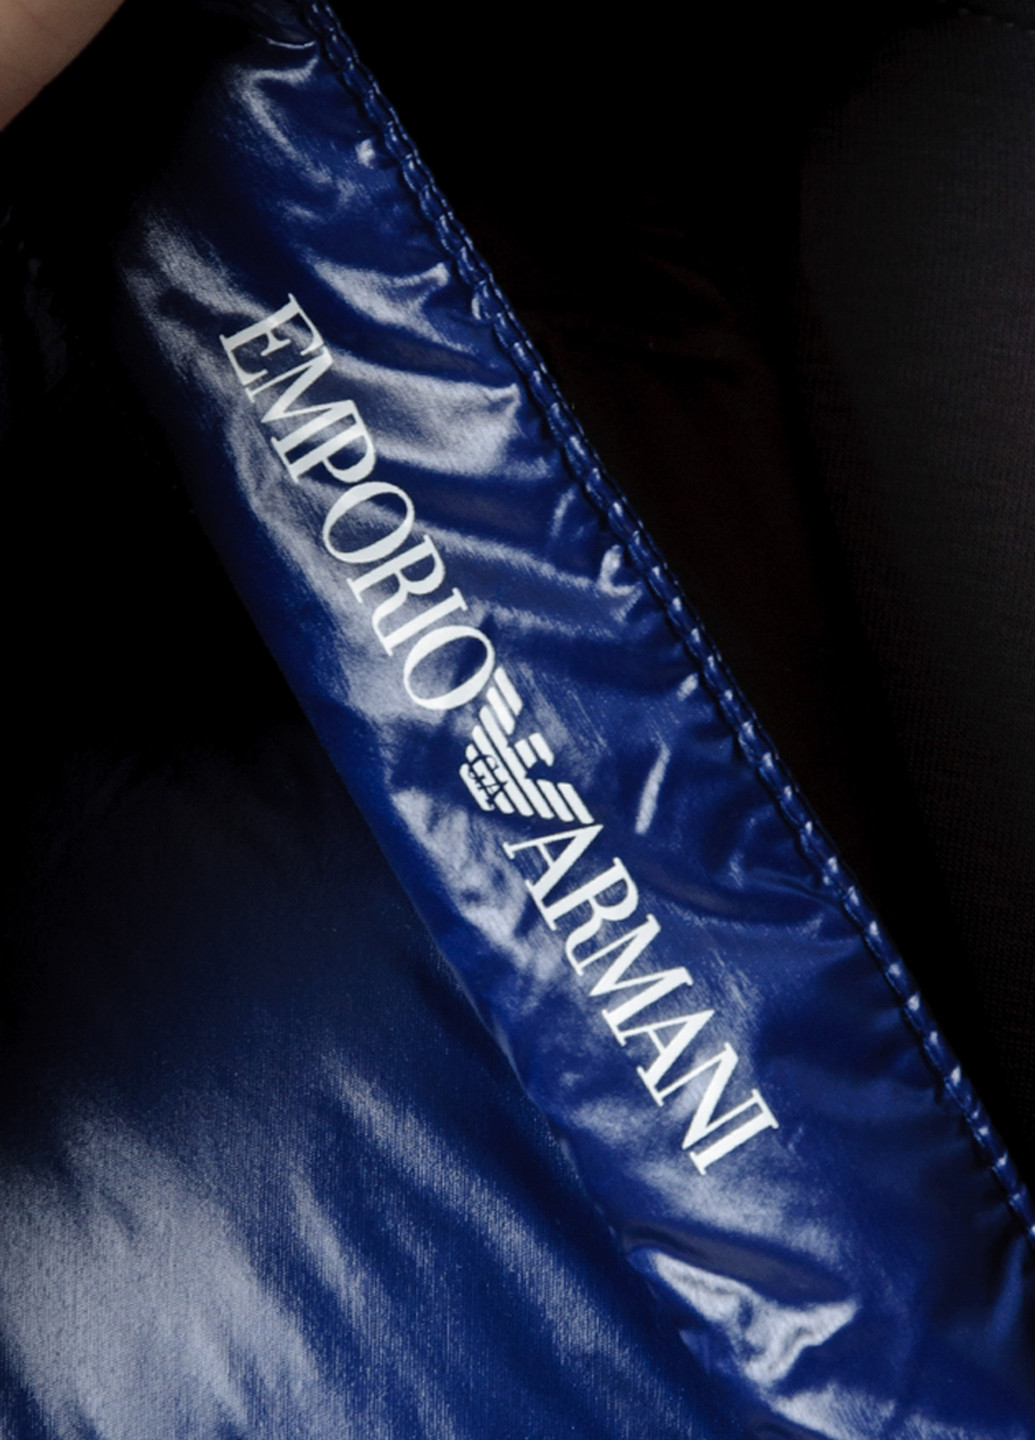 Синя зимня куртка Emporio Armani